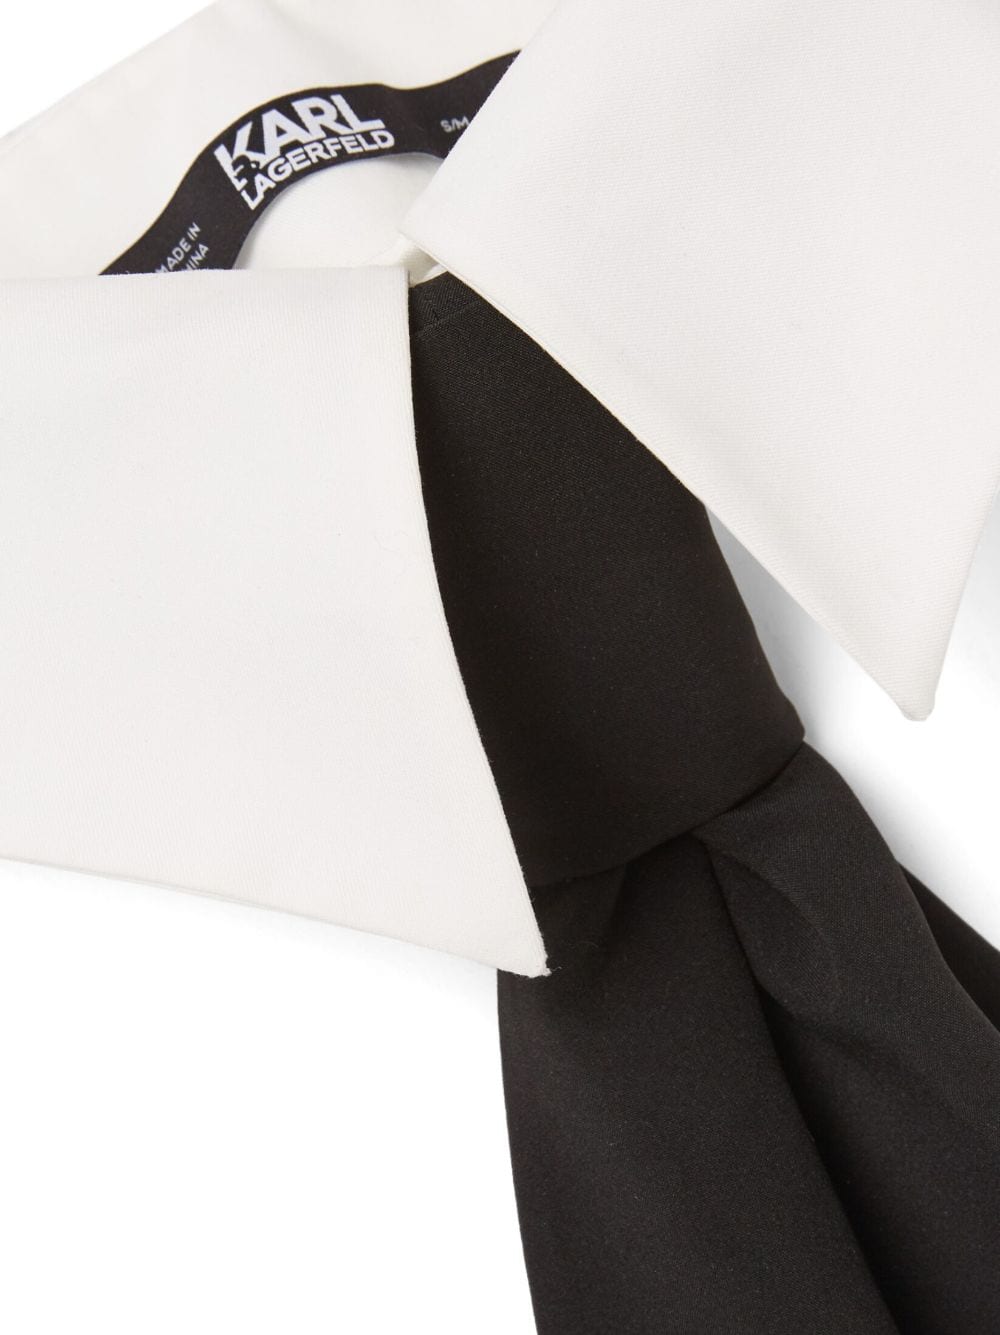 Karl Lagerfeld KL Monogram Jacquard Bow Tie - Black